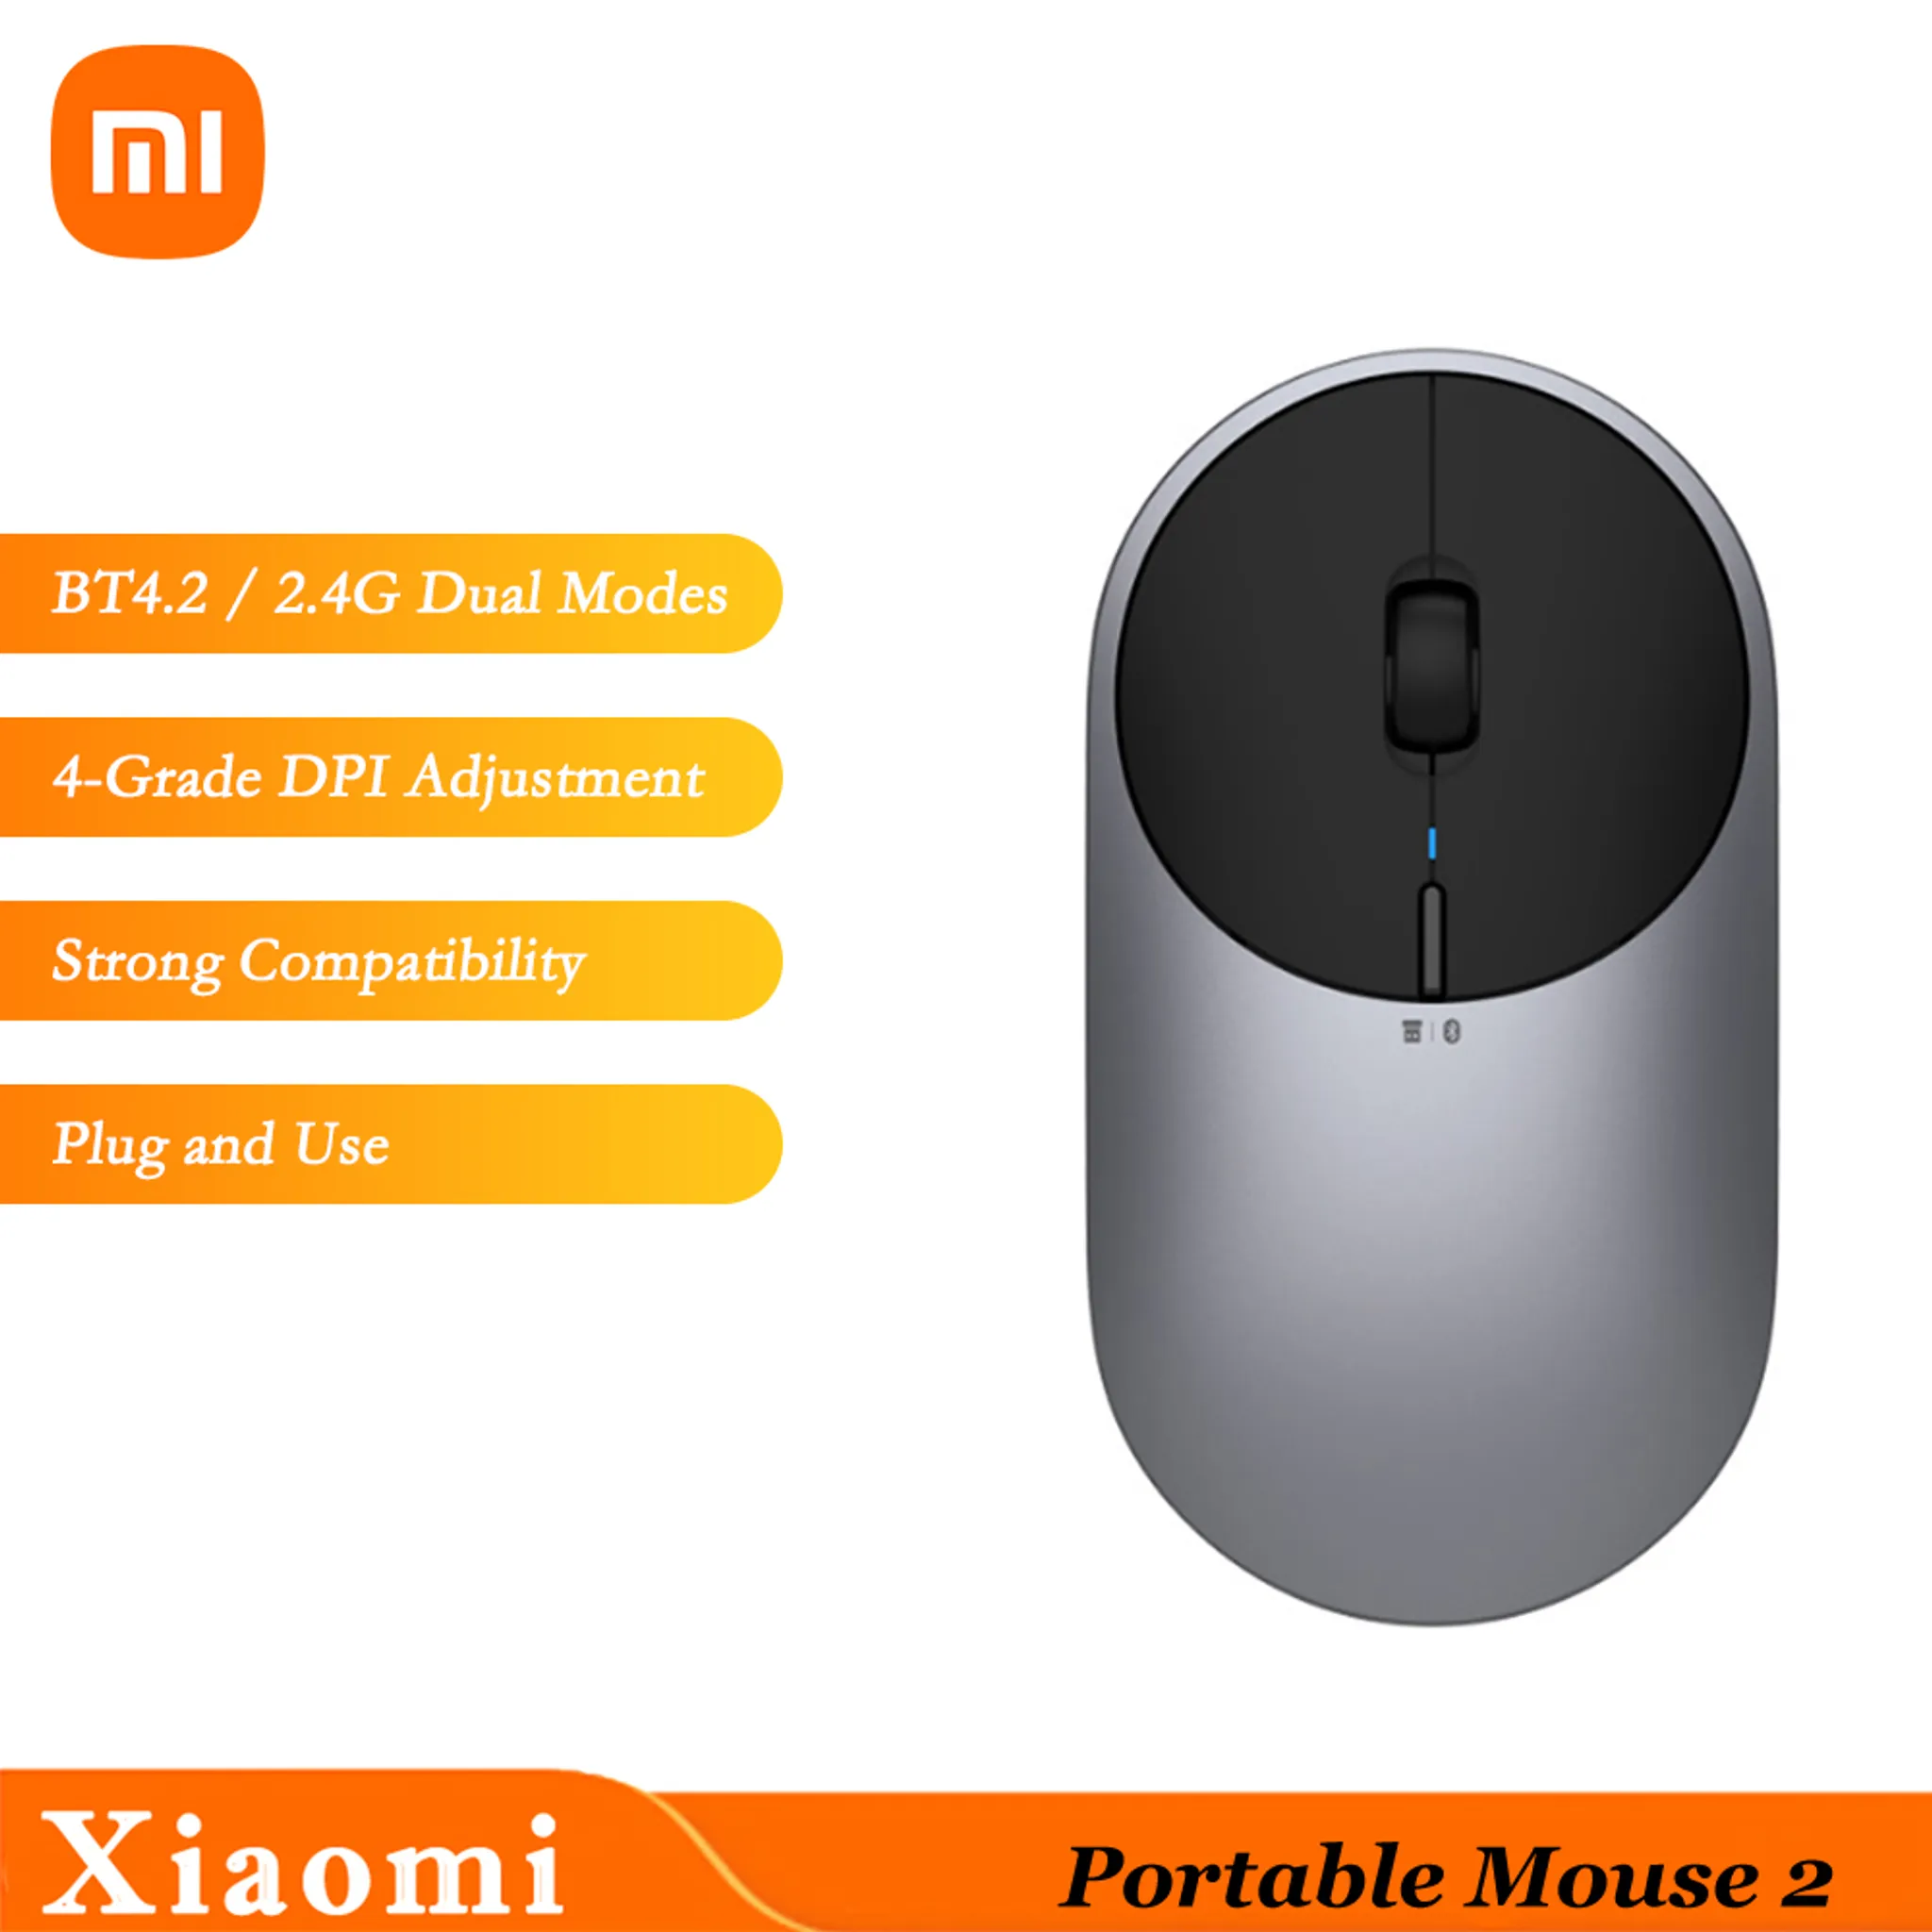 Drahtlose Maus Mi mit Portable Mouse Xiaomi 2